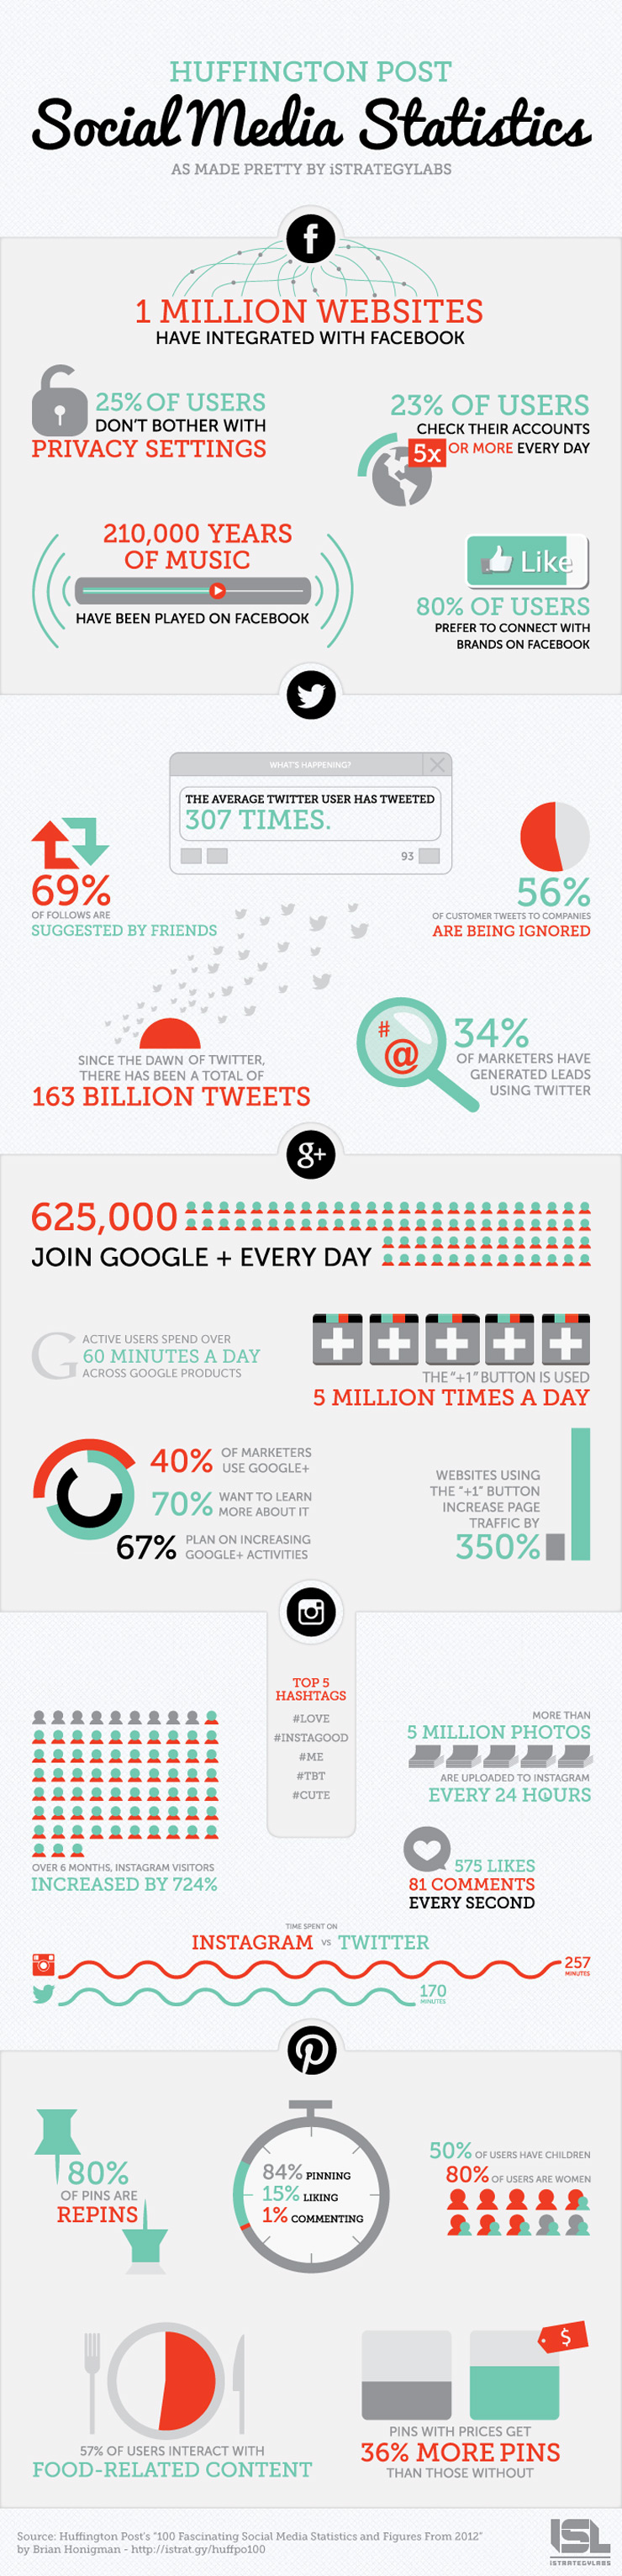 HuffPost Social Media Statistics Infographic